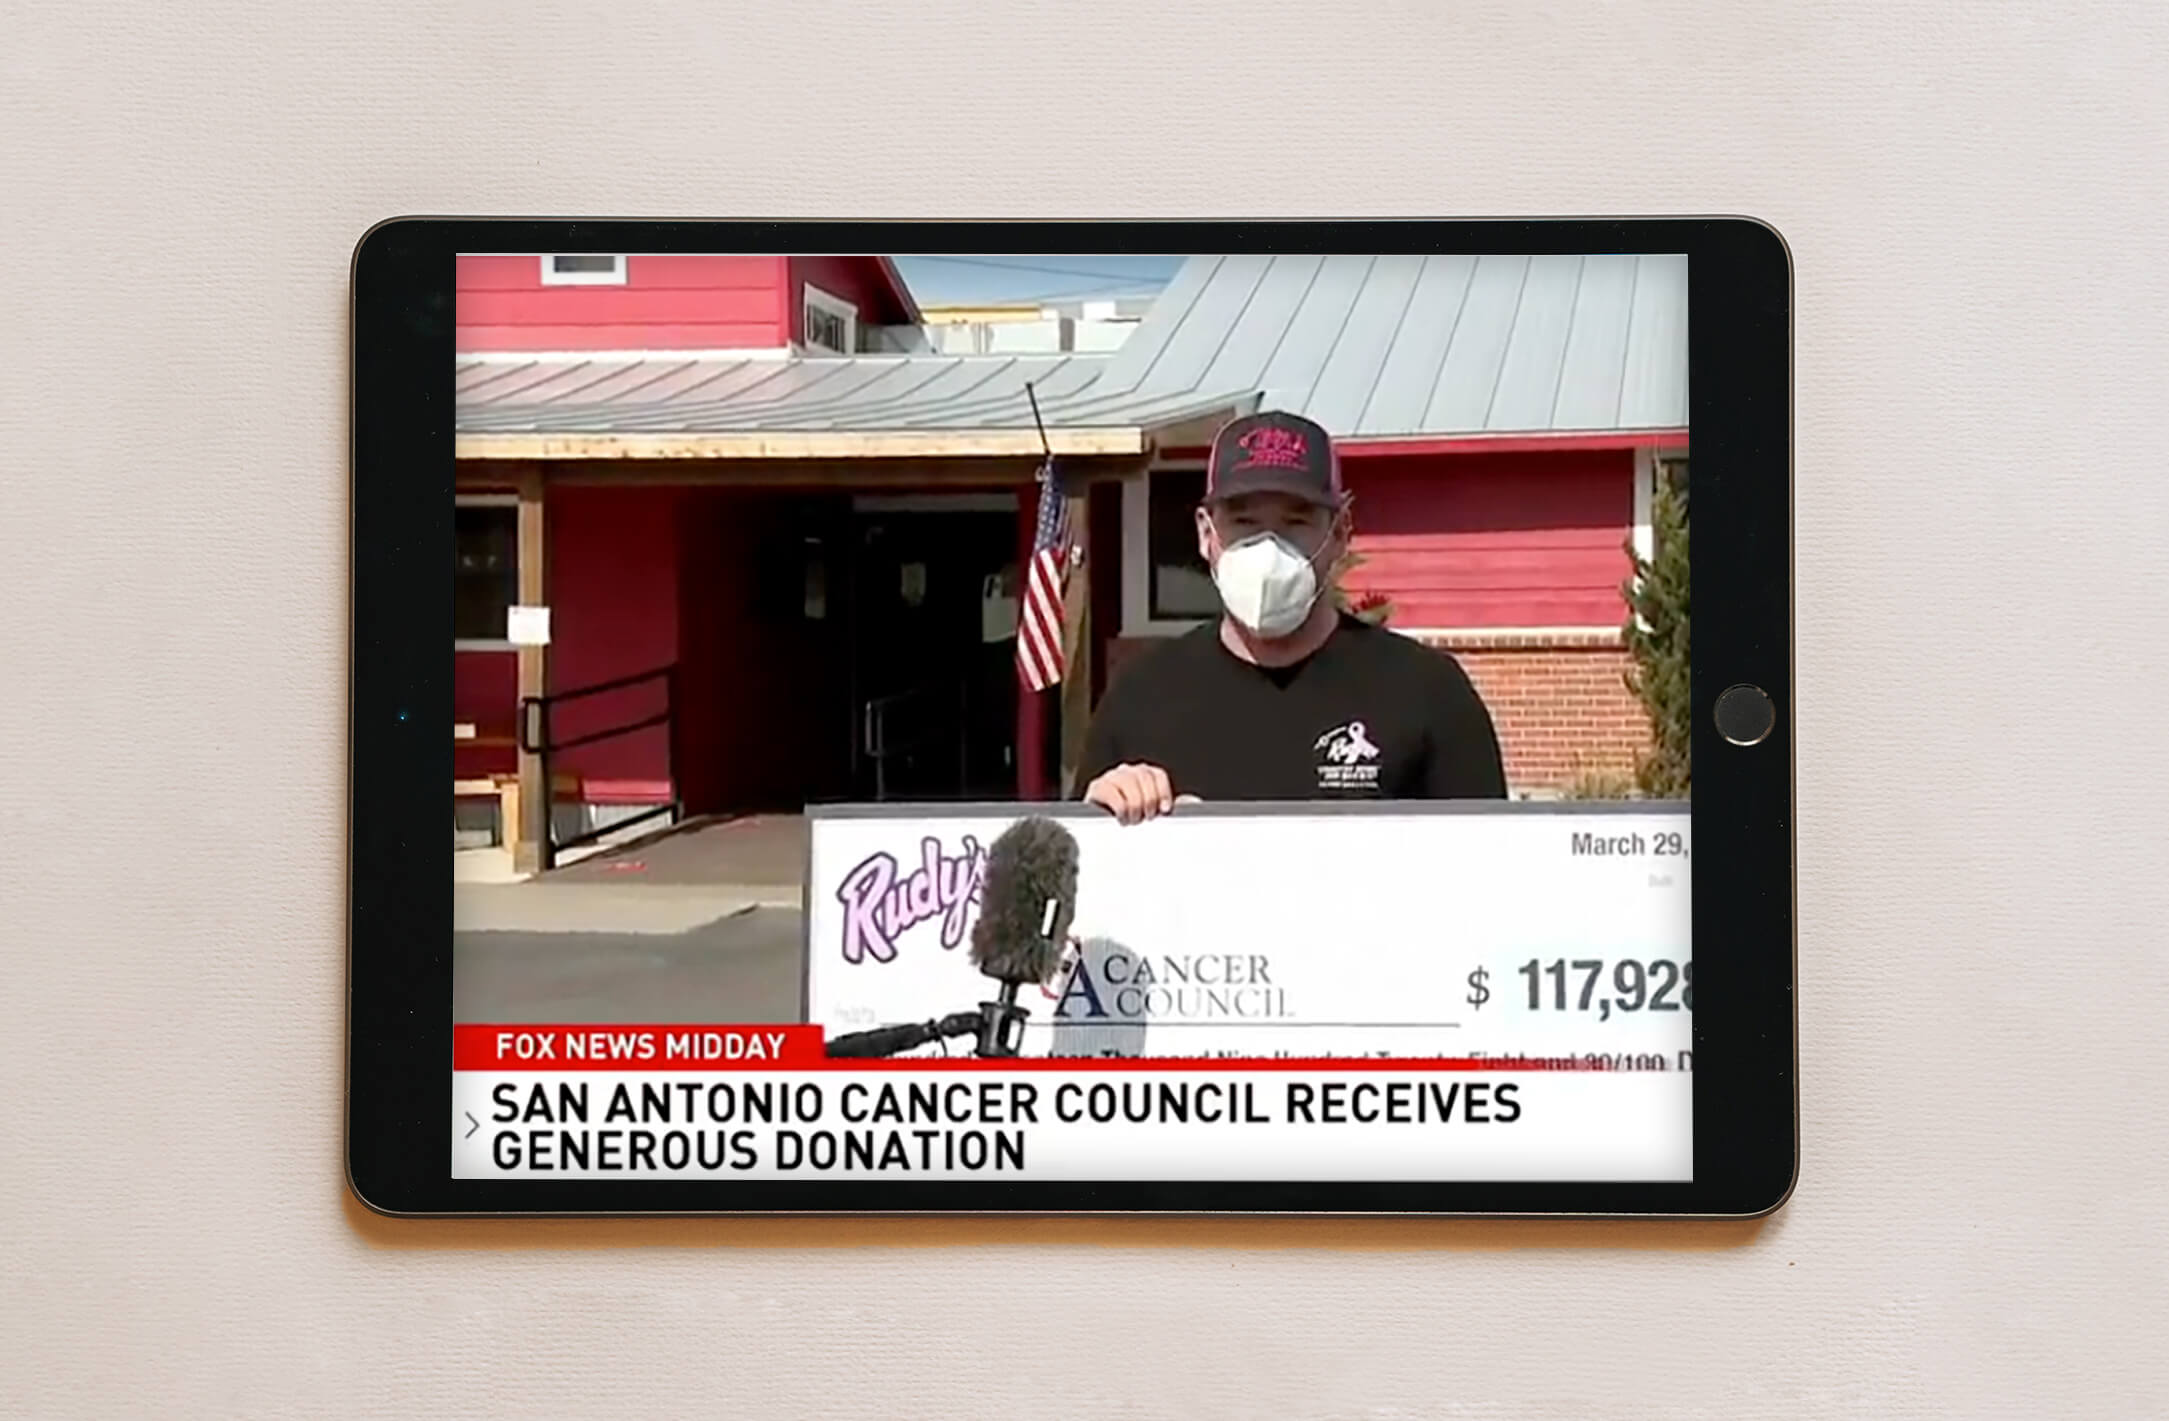 Rudy's Bar-B-Q and San Antonio Cancer Society donation PR event coverage